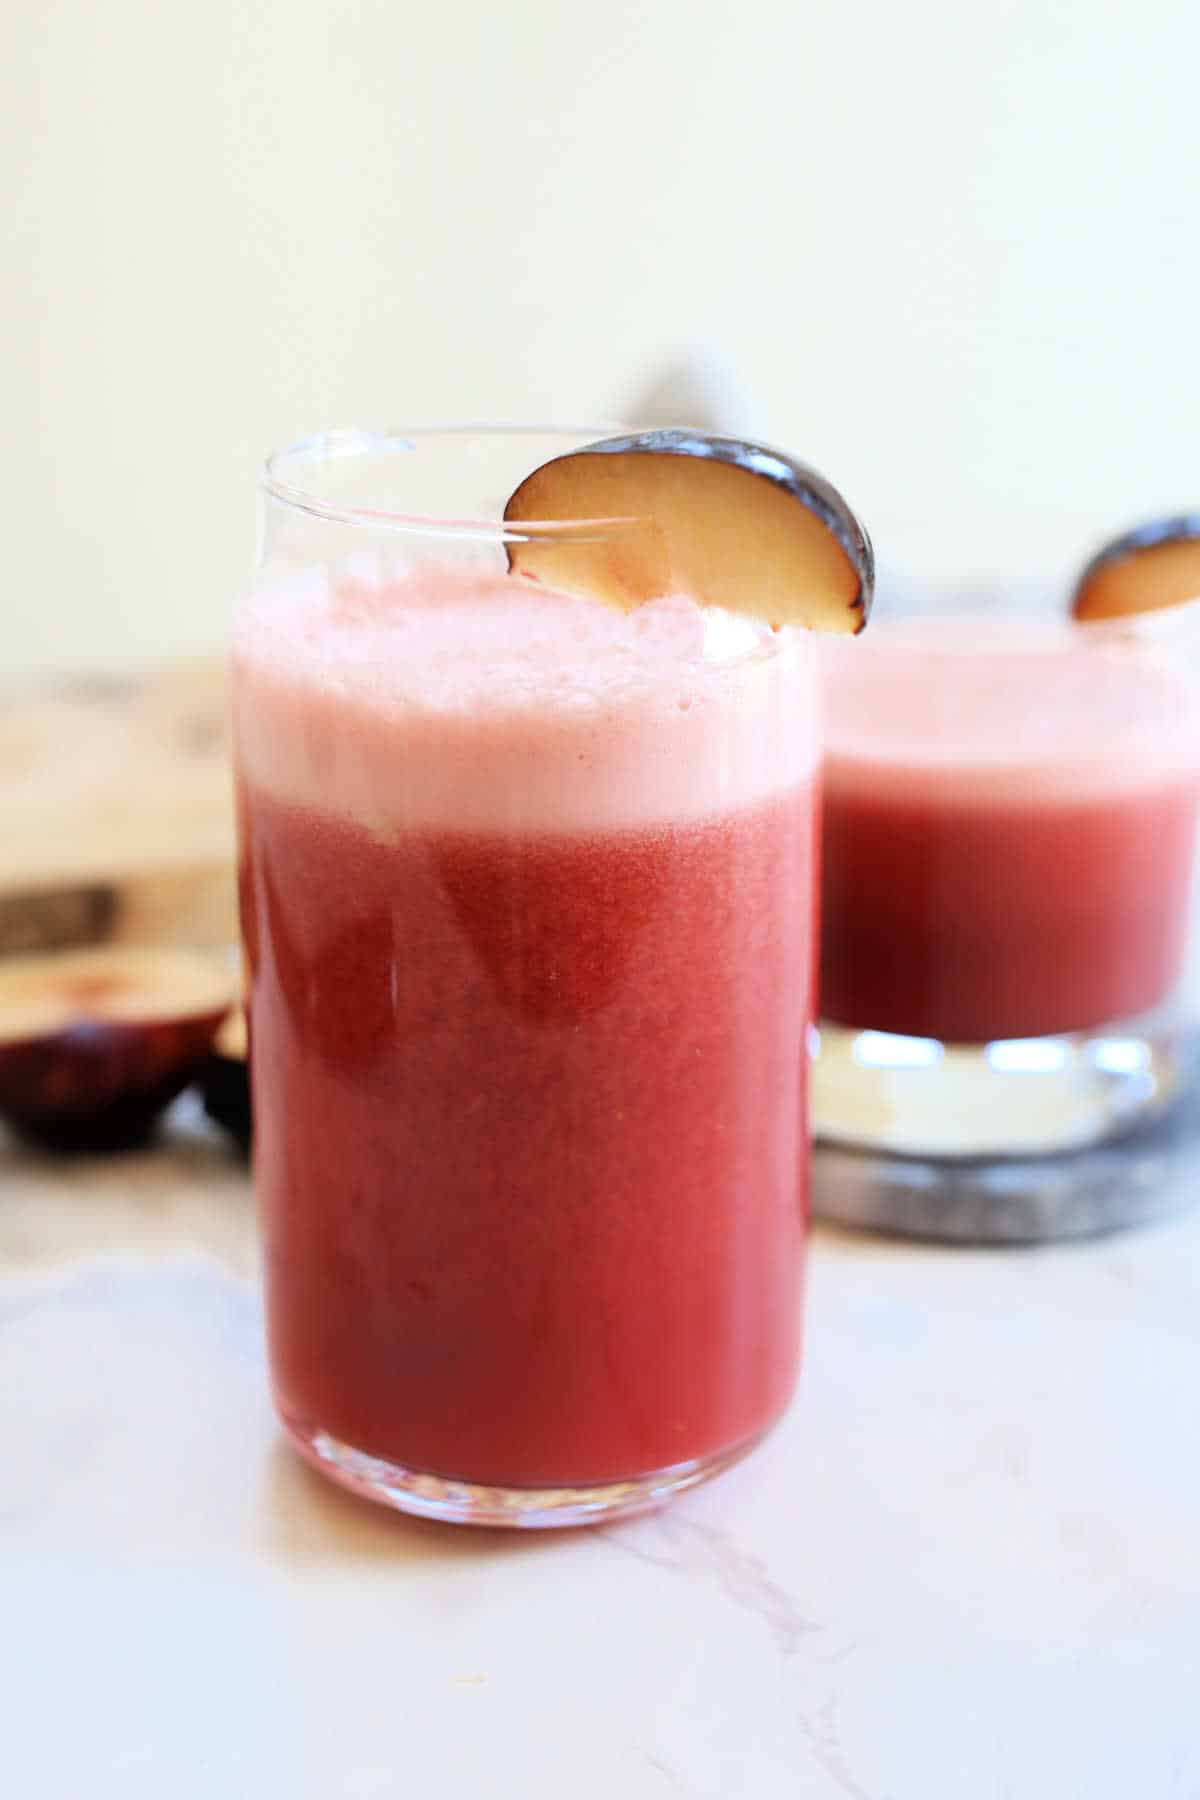 Glass of fresh plum juice.